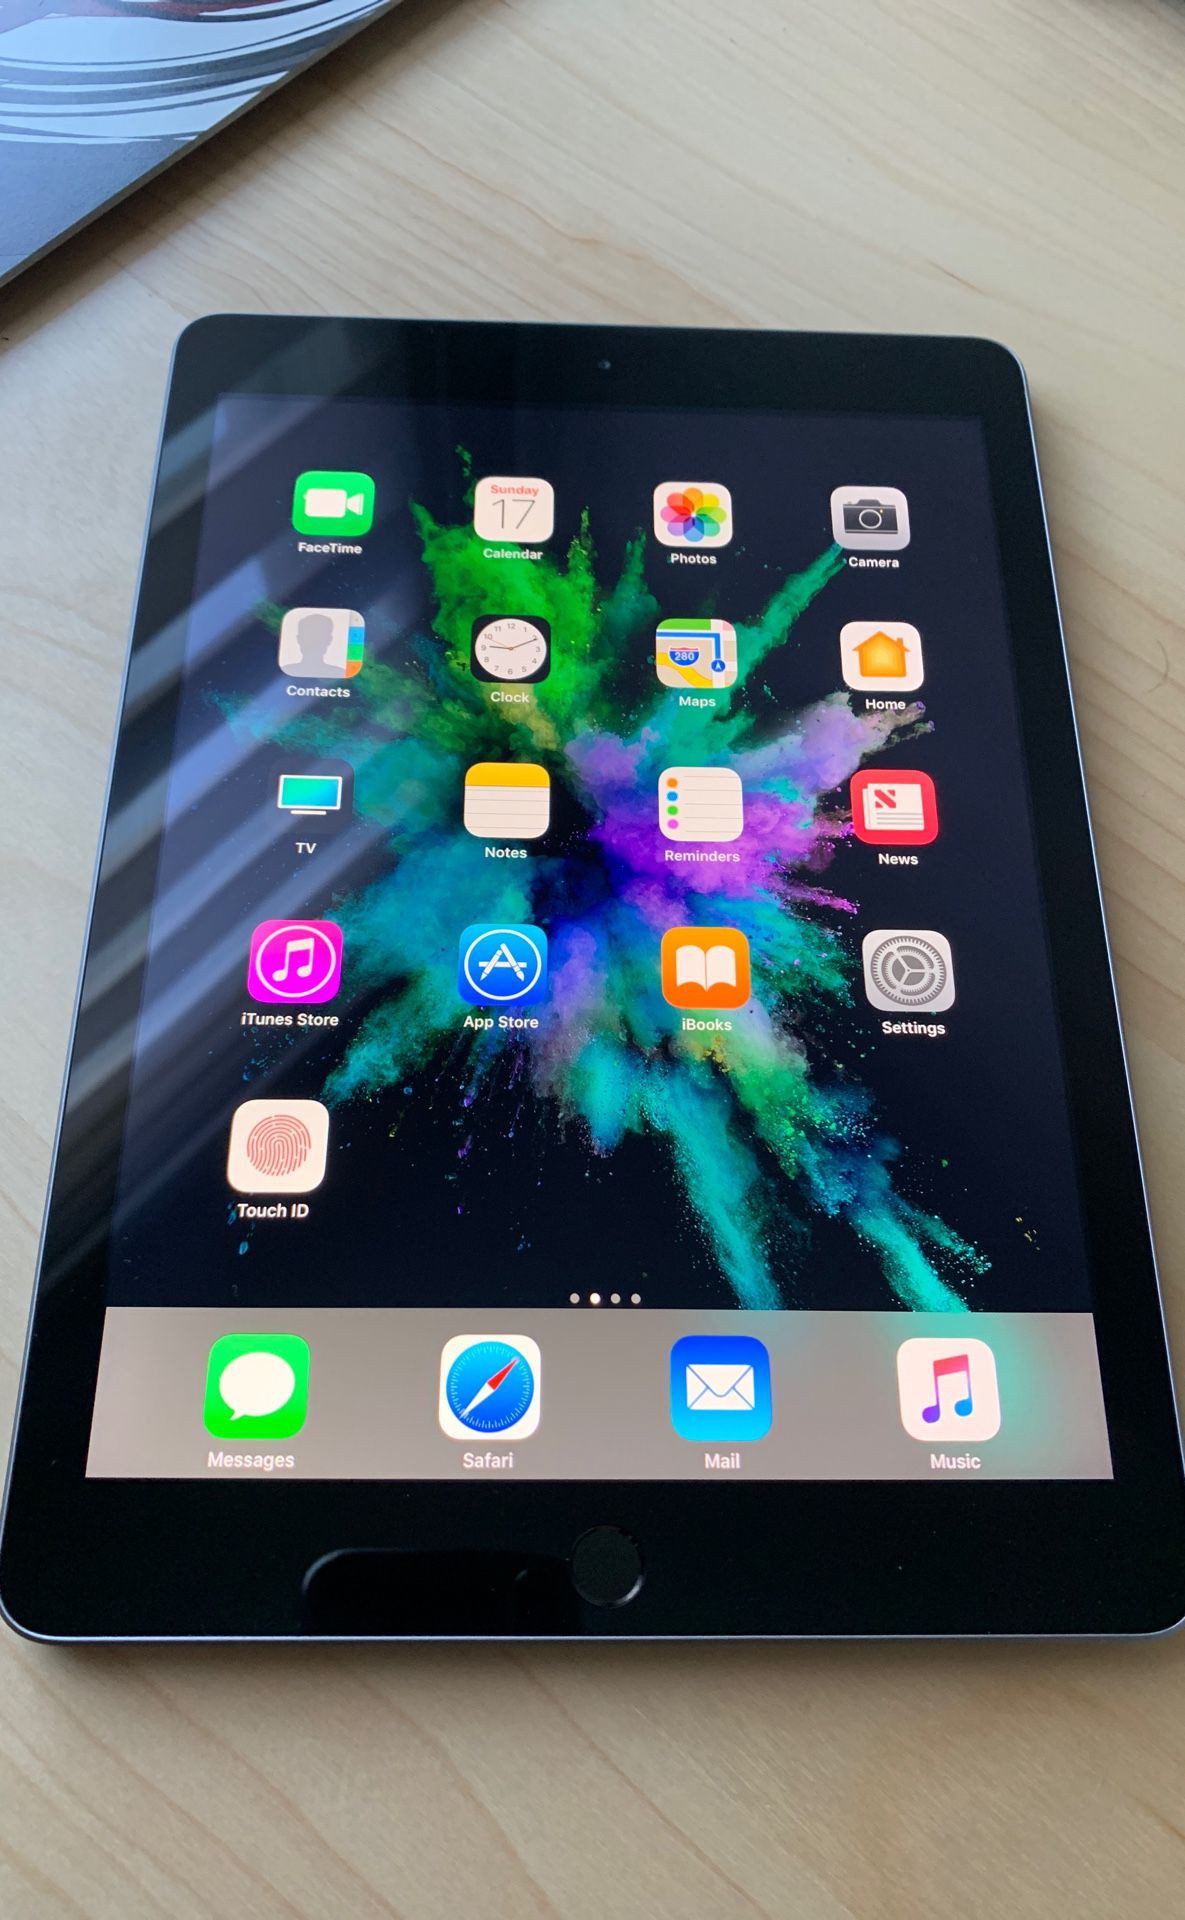 Apple iPad Air 2 32GB space gray